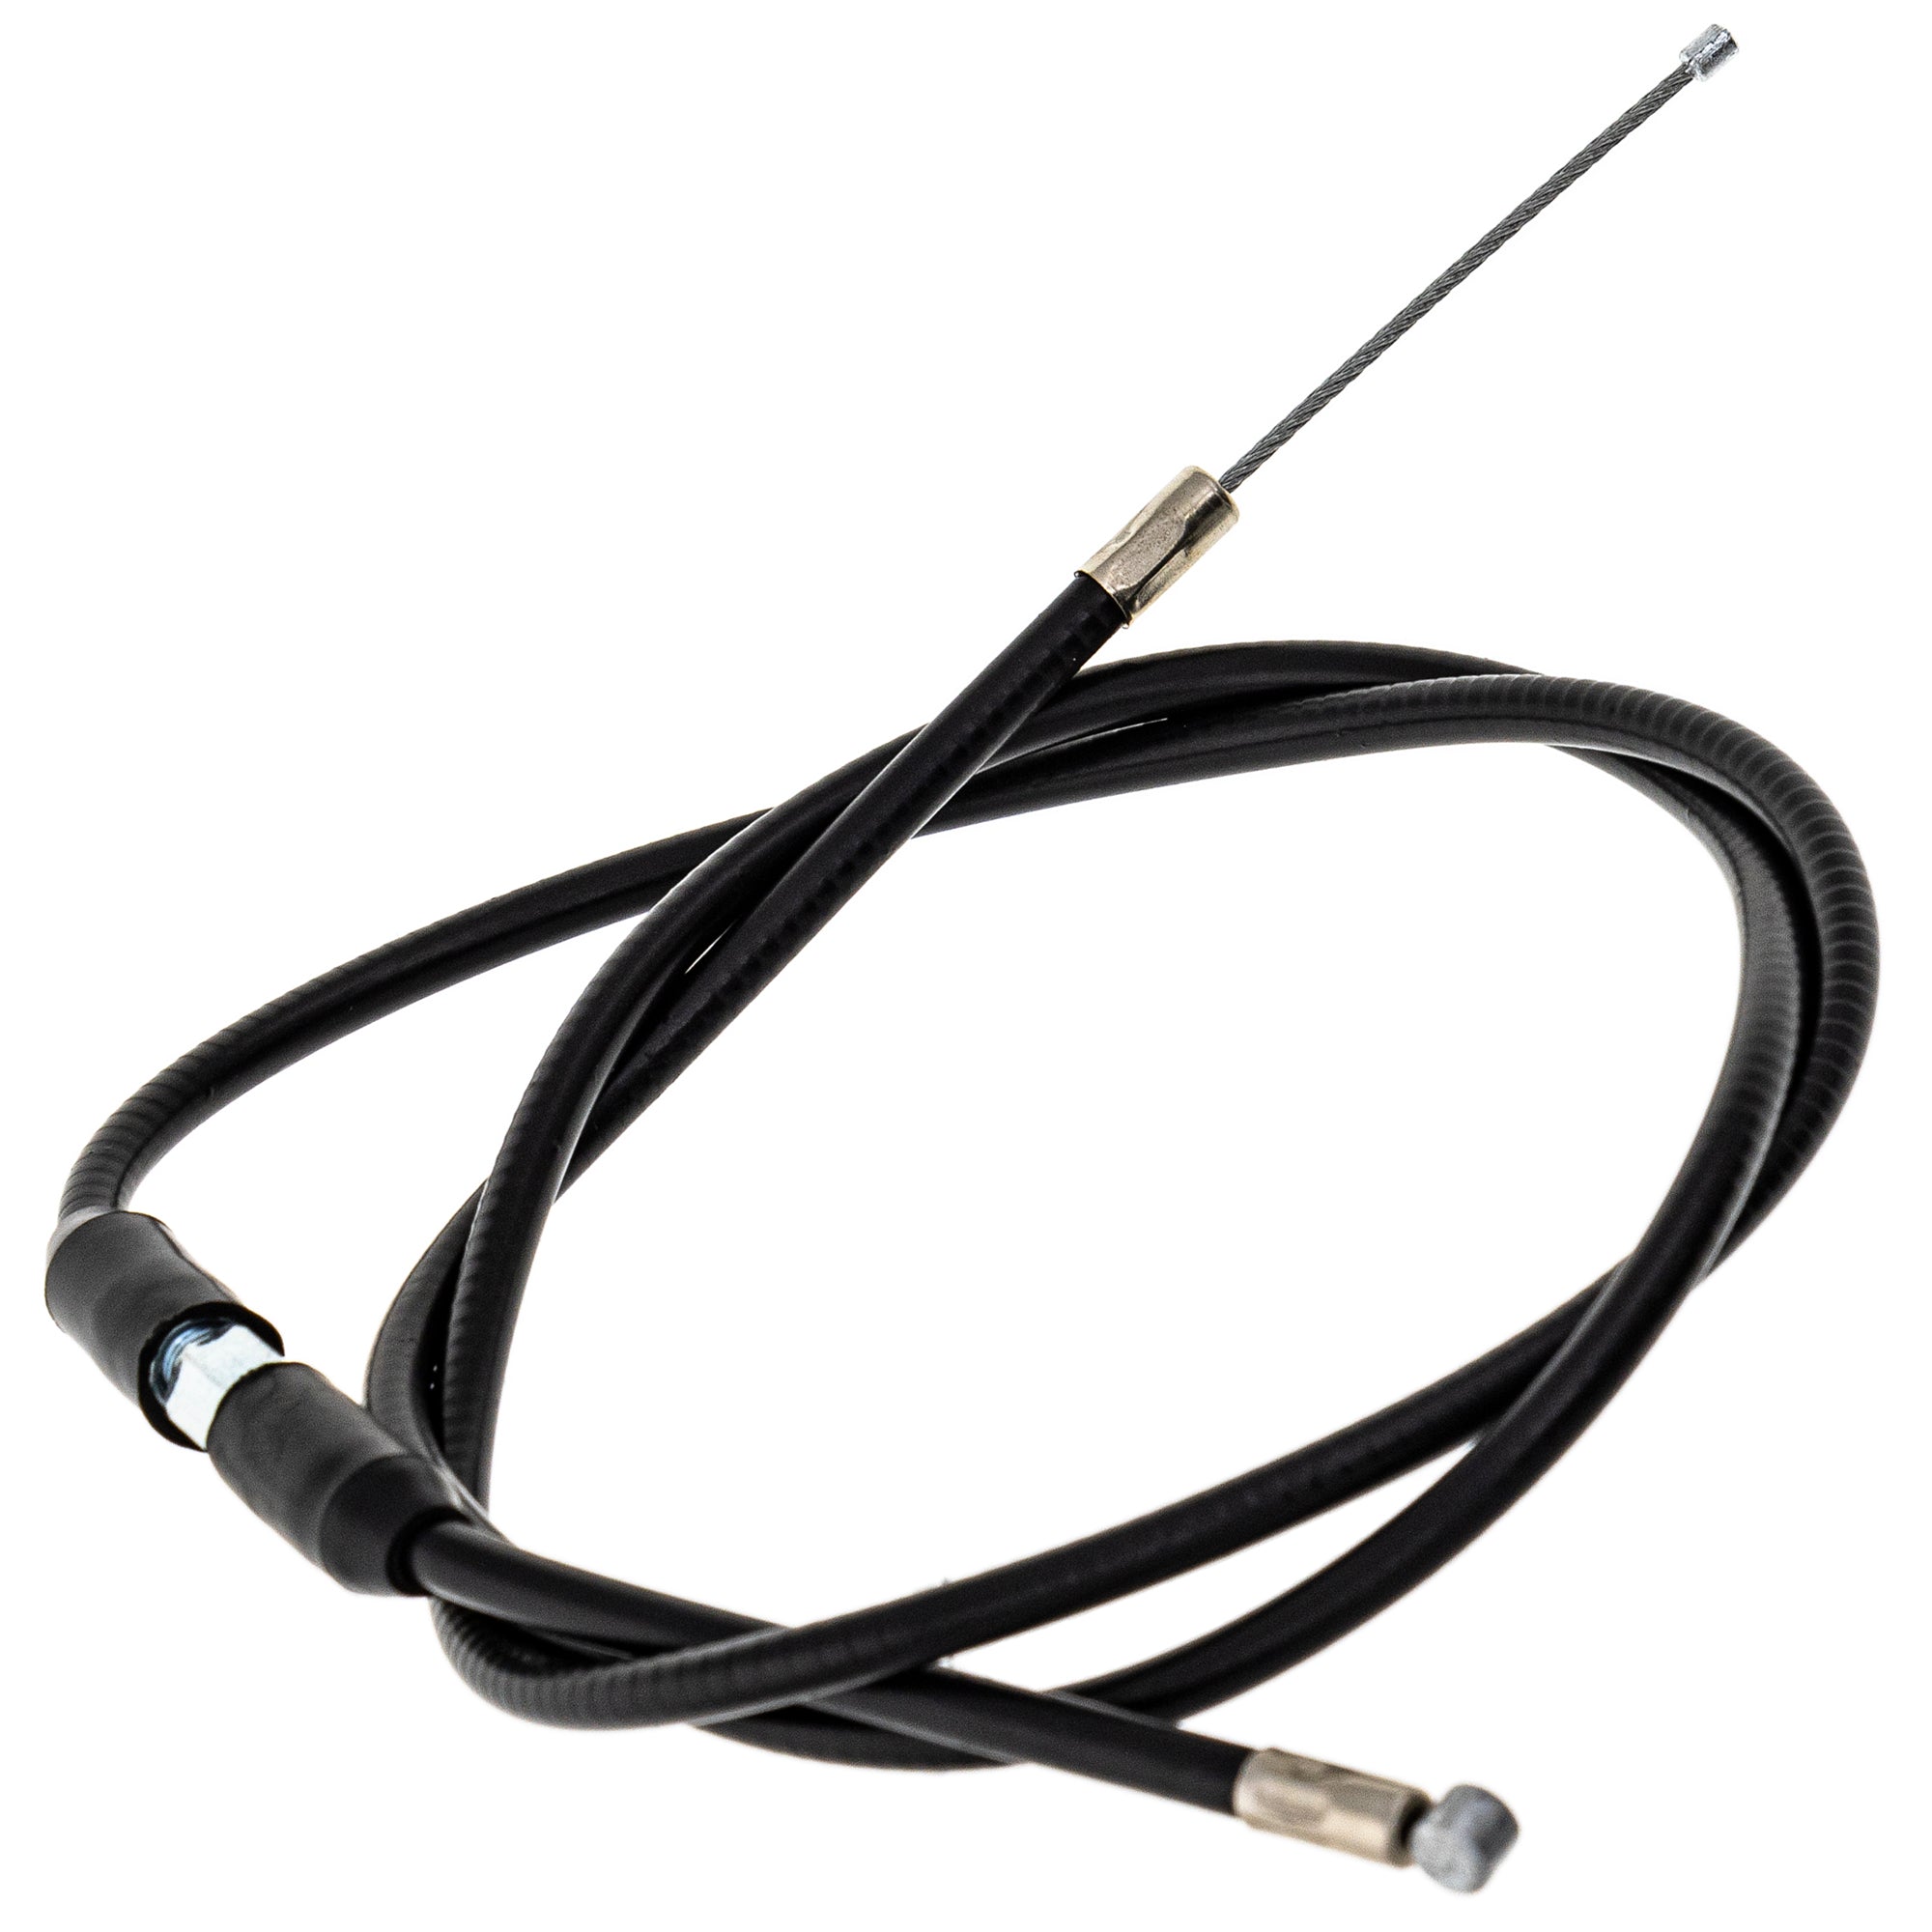 Hot Start Cable for Suzuki RMZ250 RMZ450 58900-49H10 58900-28H00